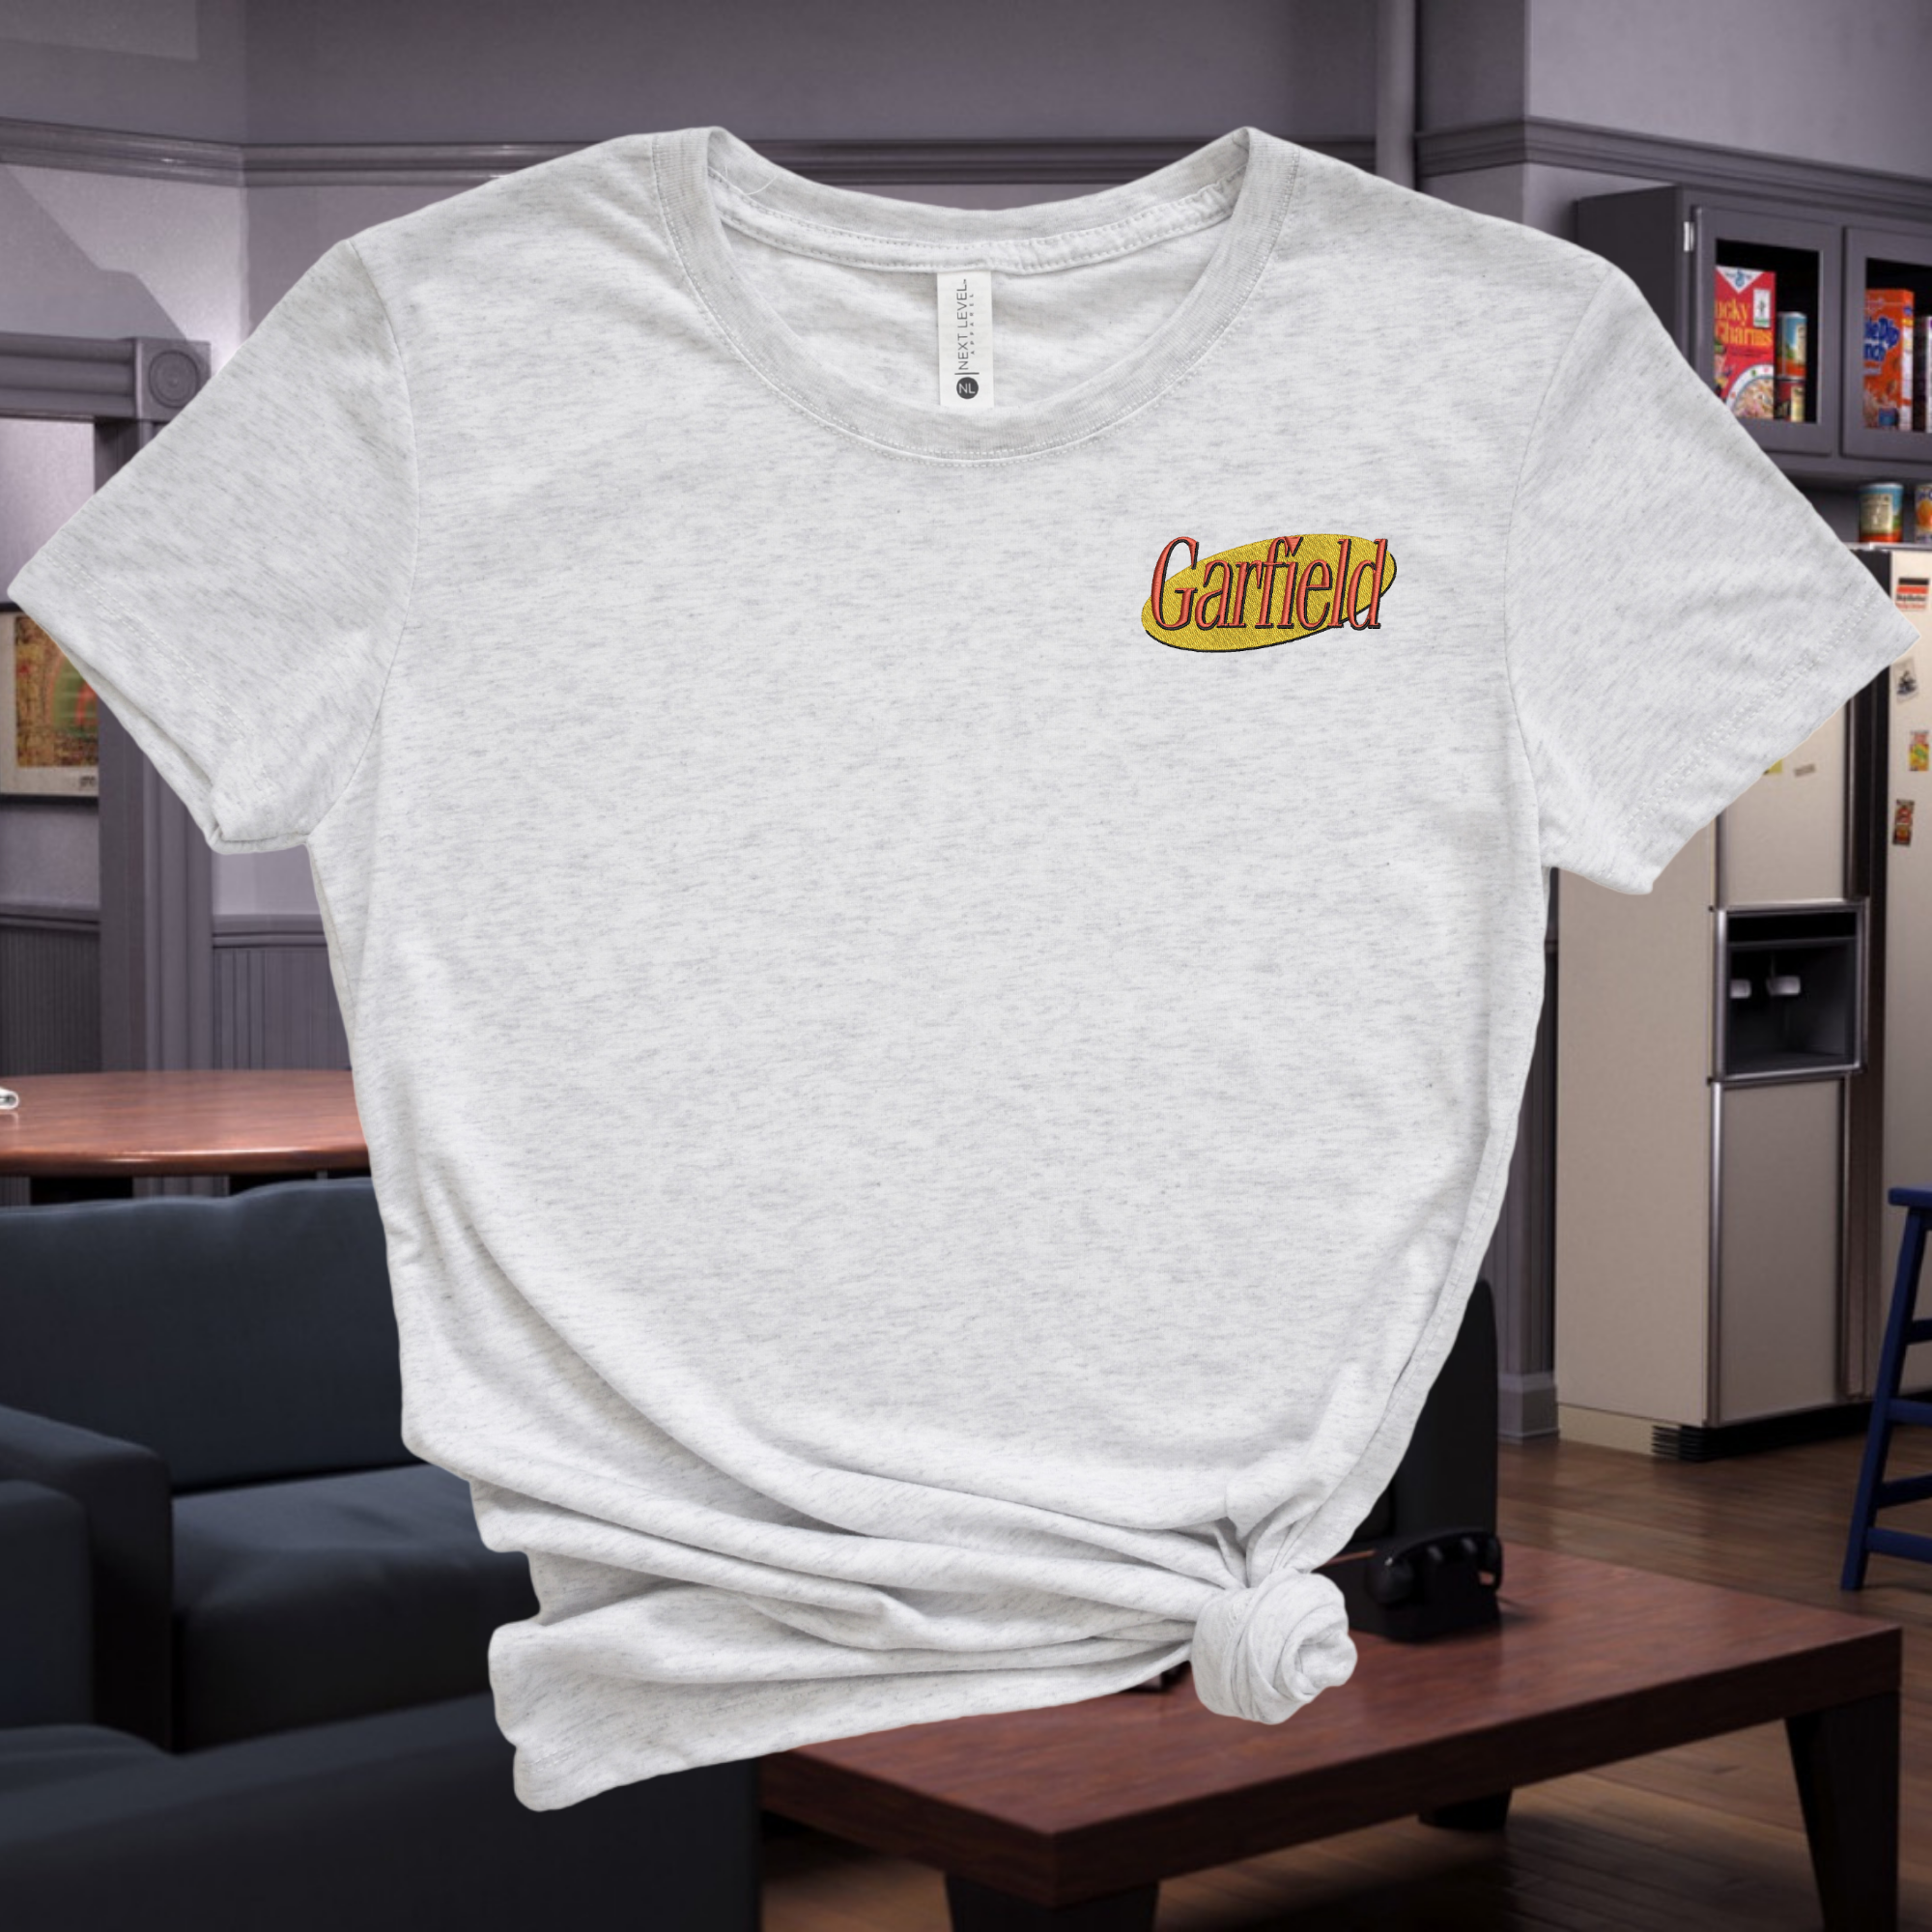 Garfield Seinfeld Crossover Episode Embroidered Tee Shirt, Unisex